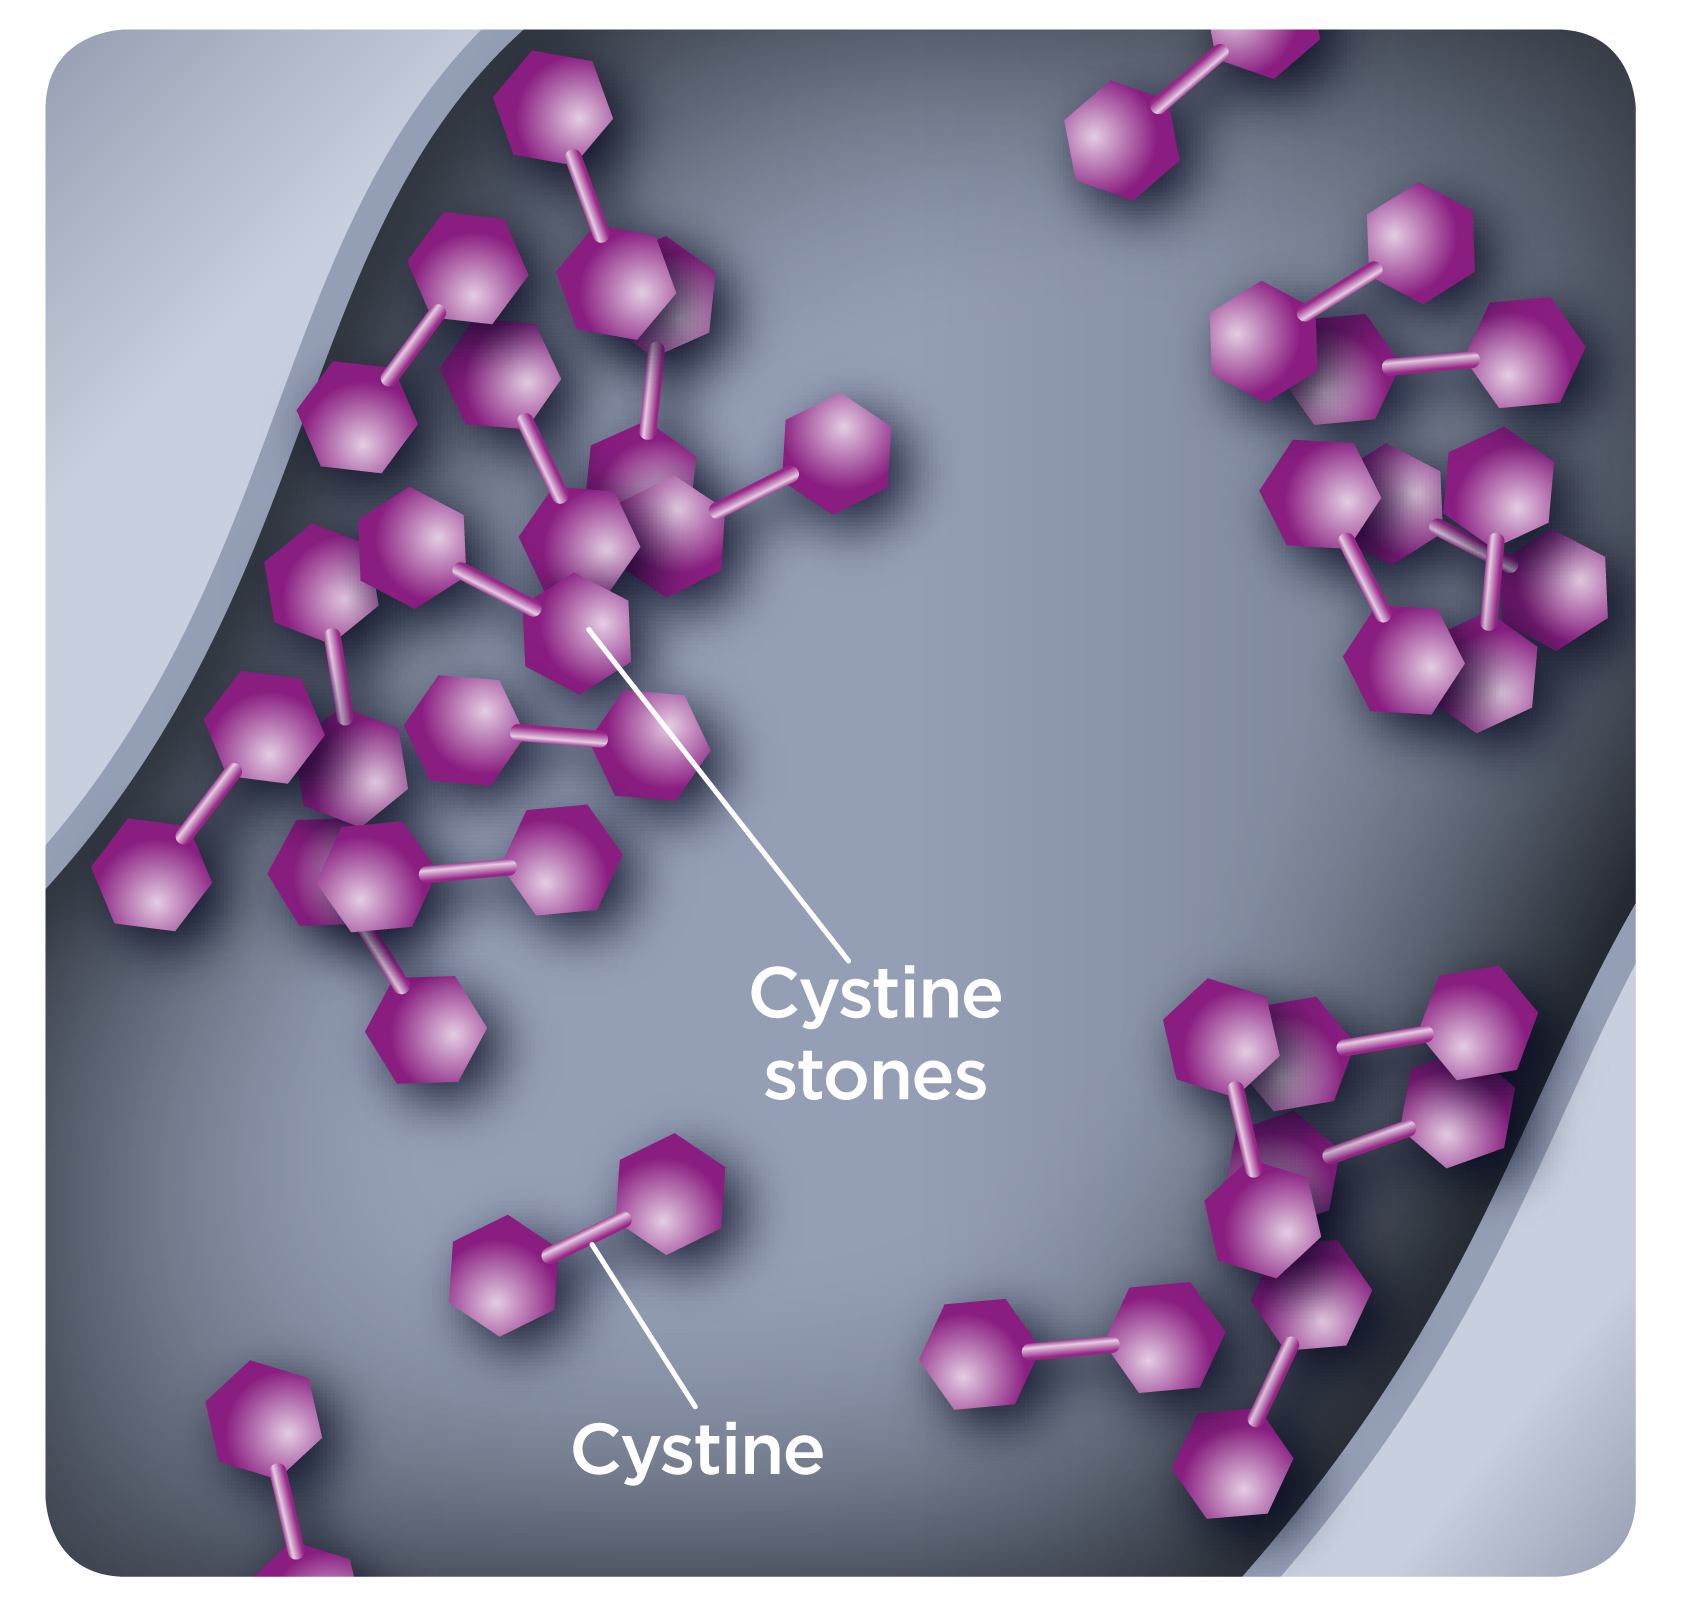 cystinuria stone